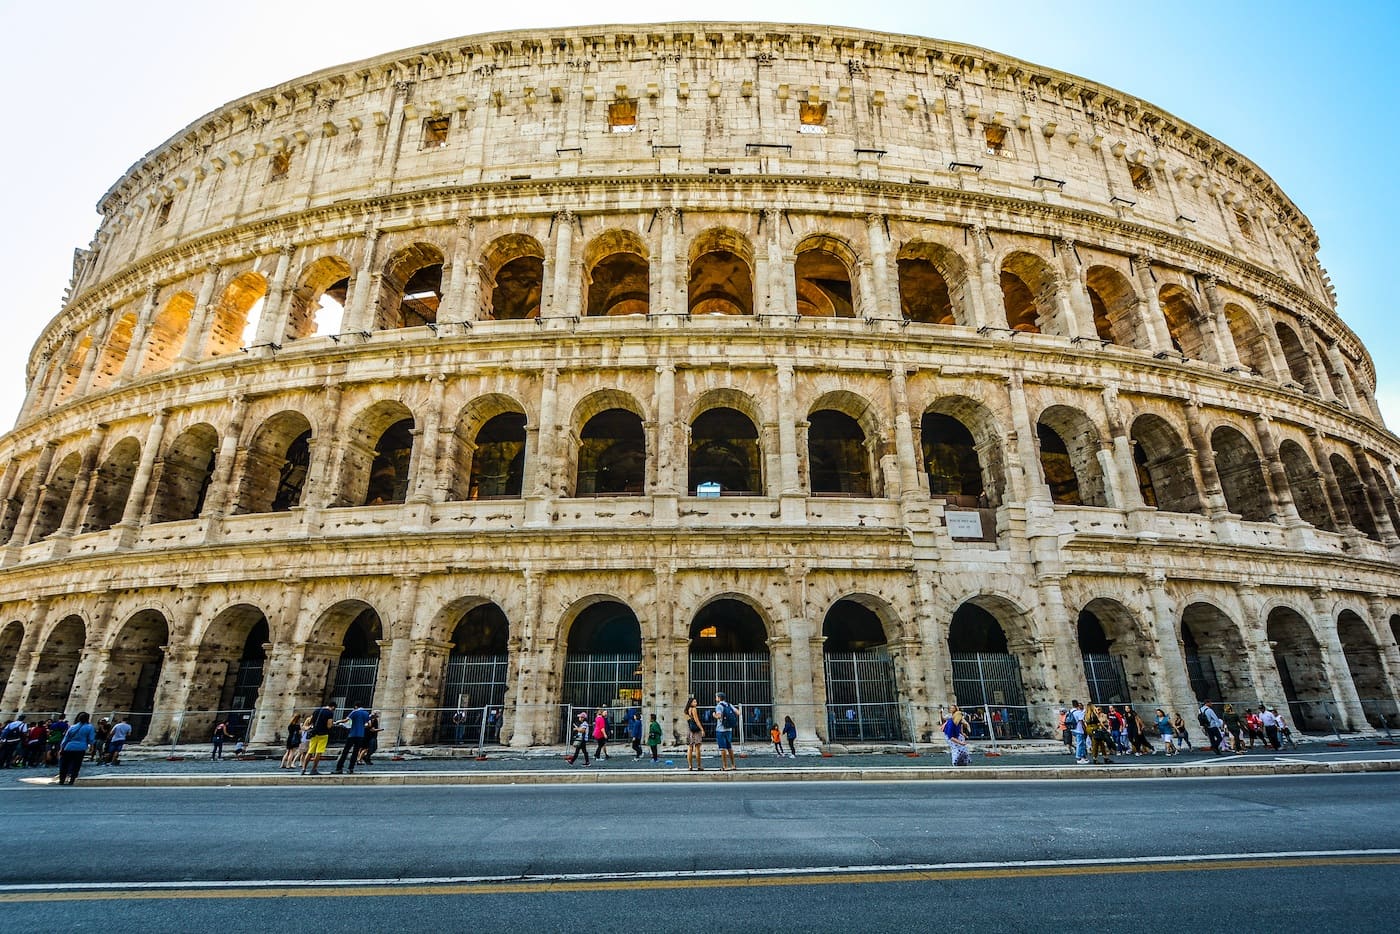 Colosseum (Rome, Italy)